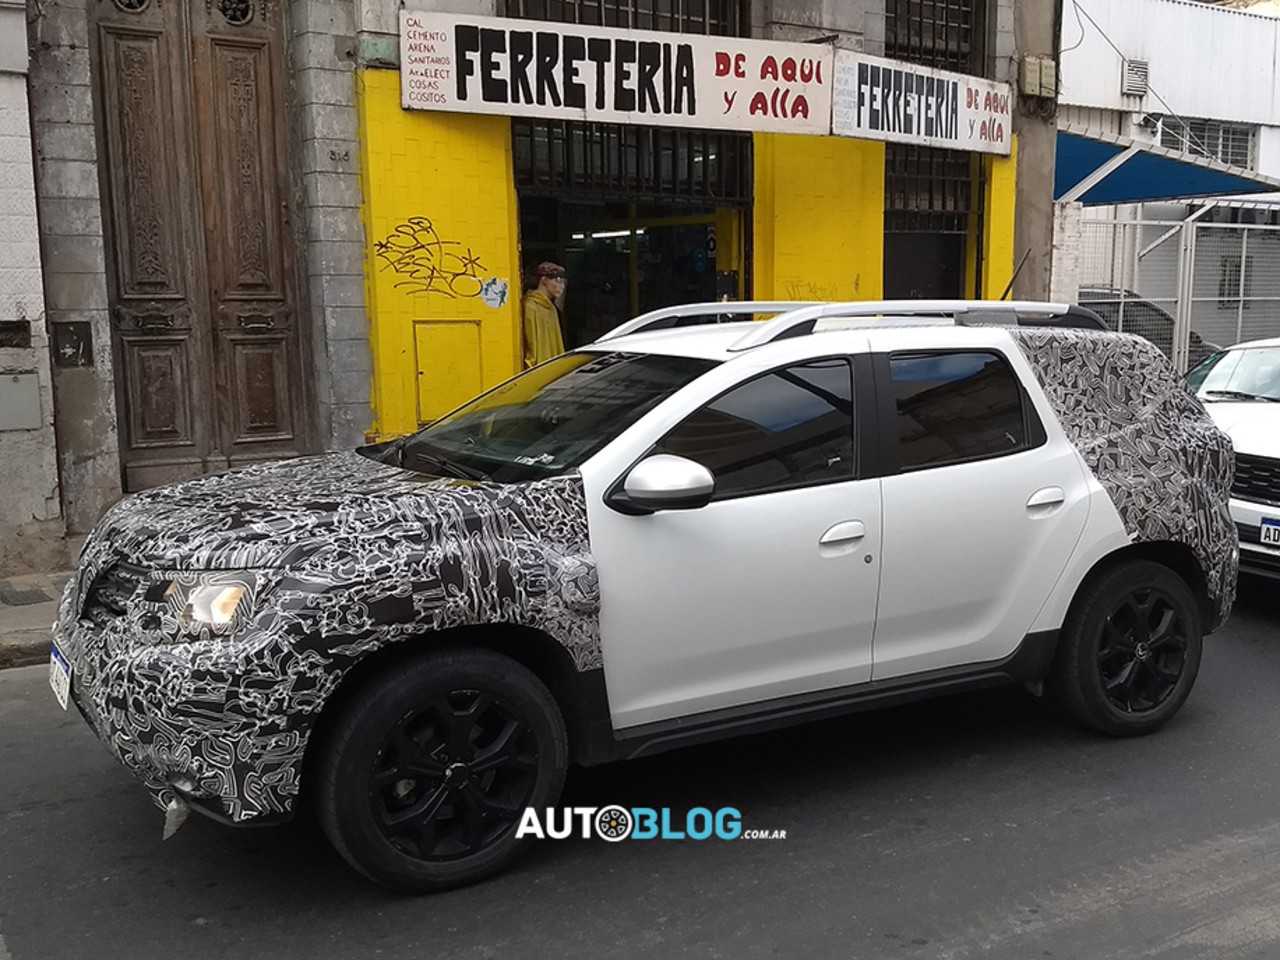 Renault Duster turbo flagrado na Argentina